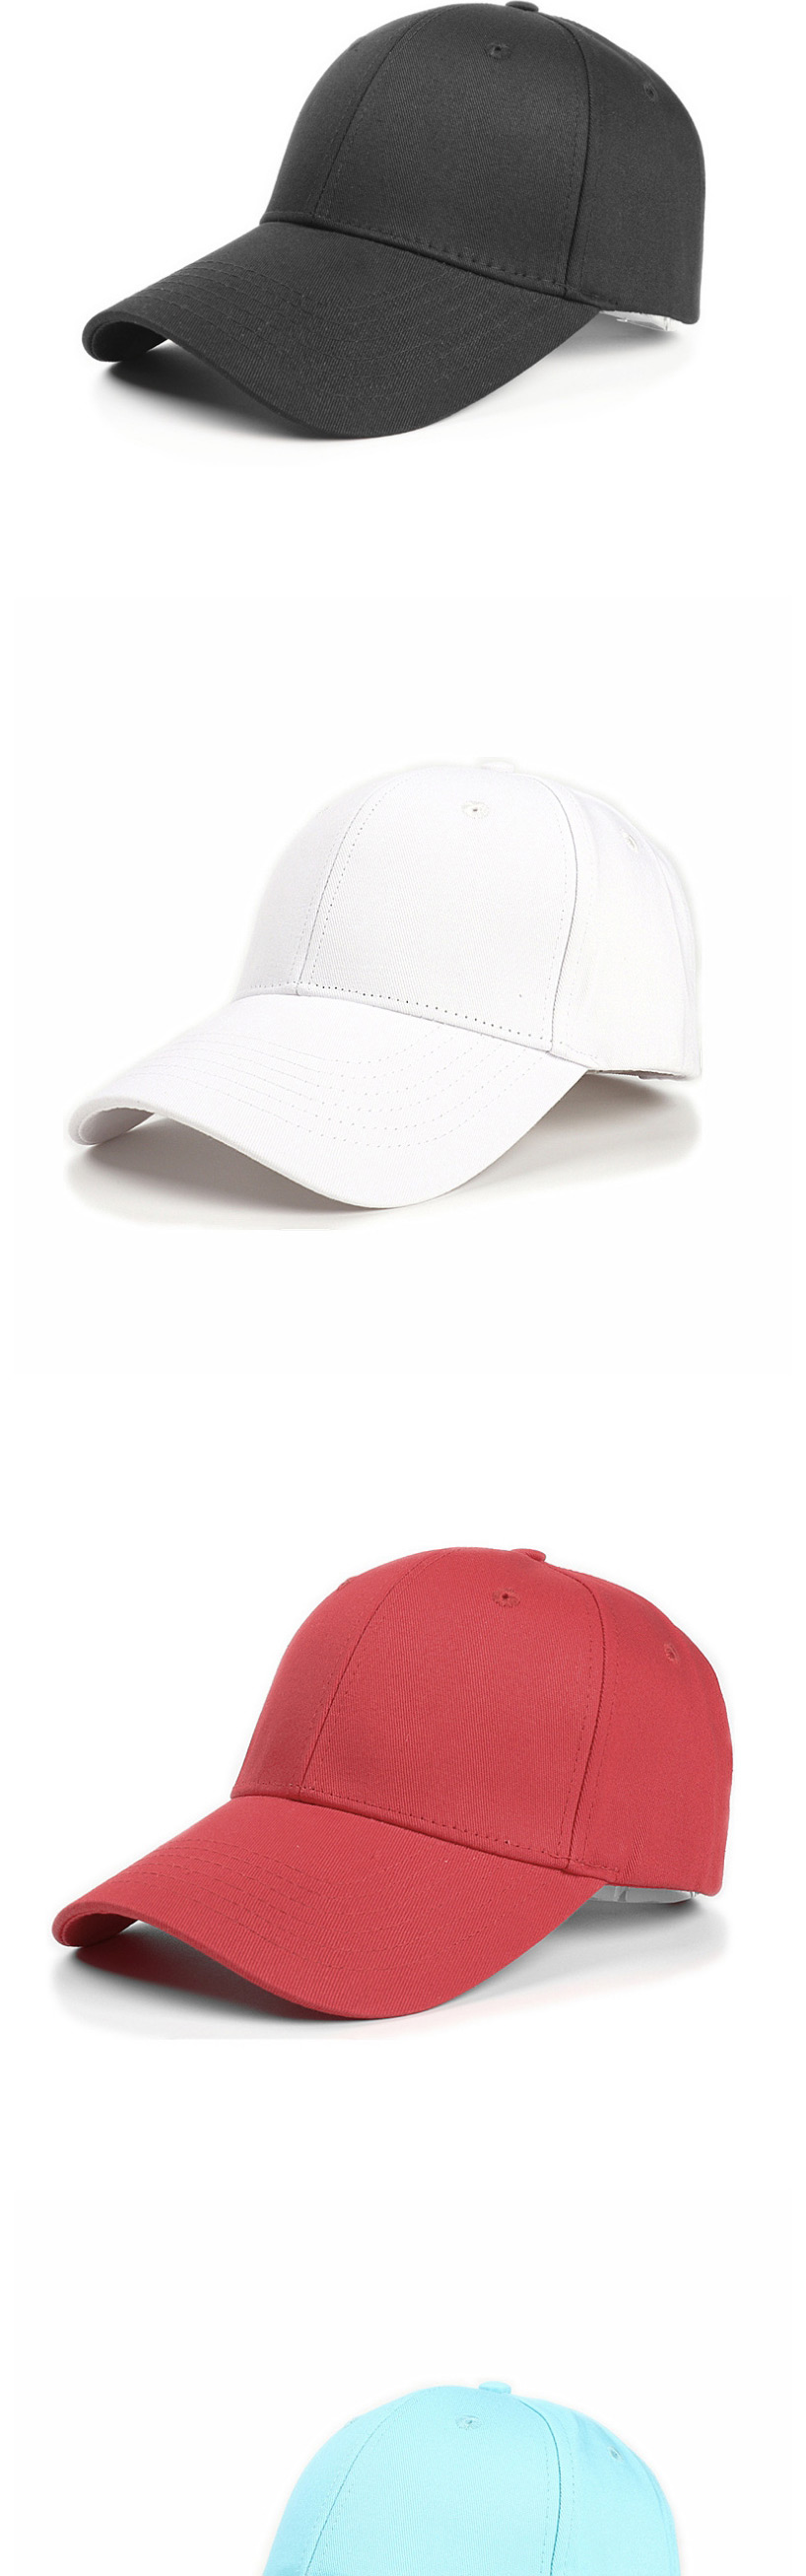 Fashion White Cotton Hard Top And Long Brim Baseball Cap,Baseball Caps